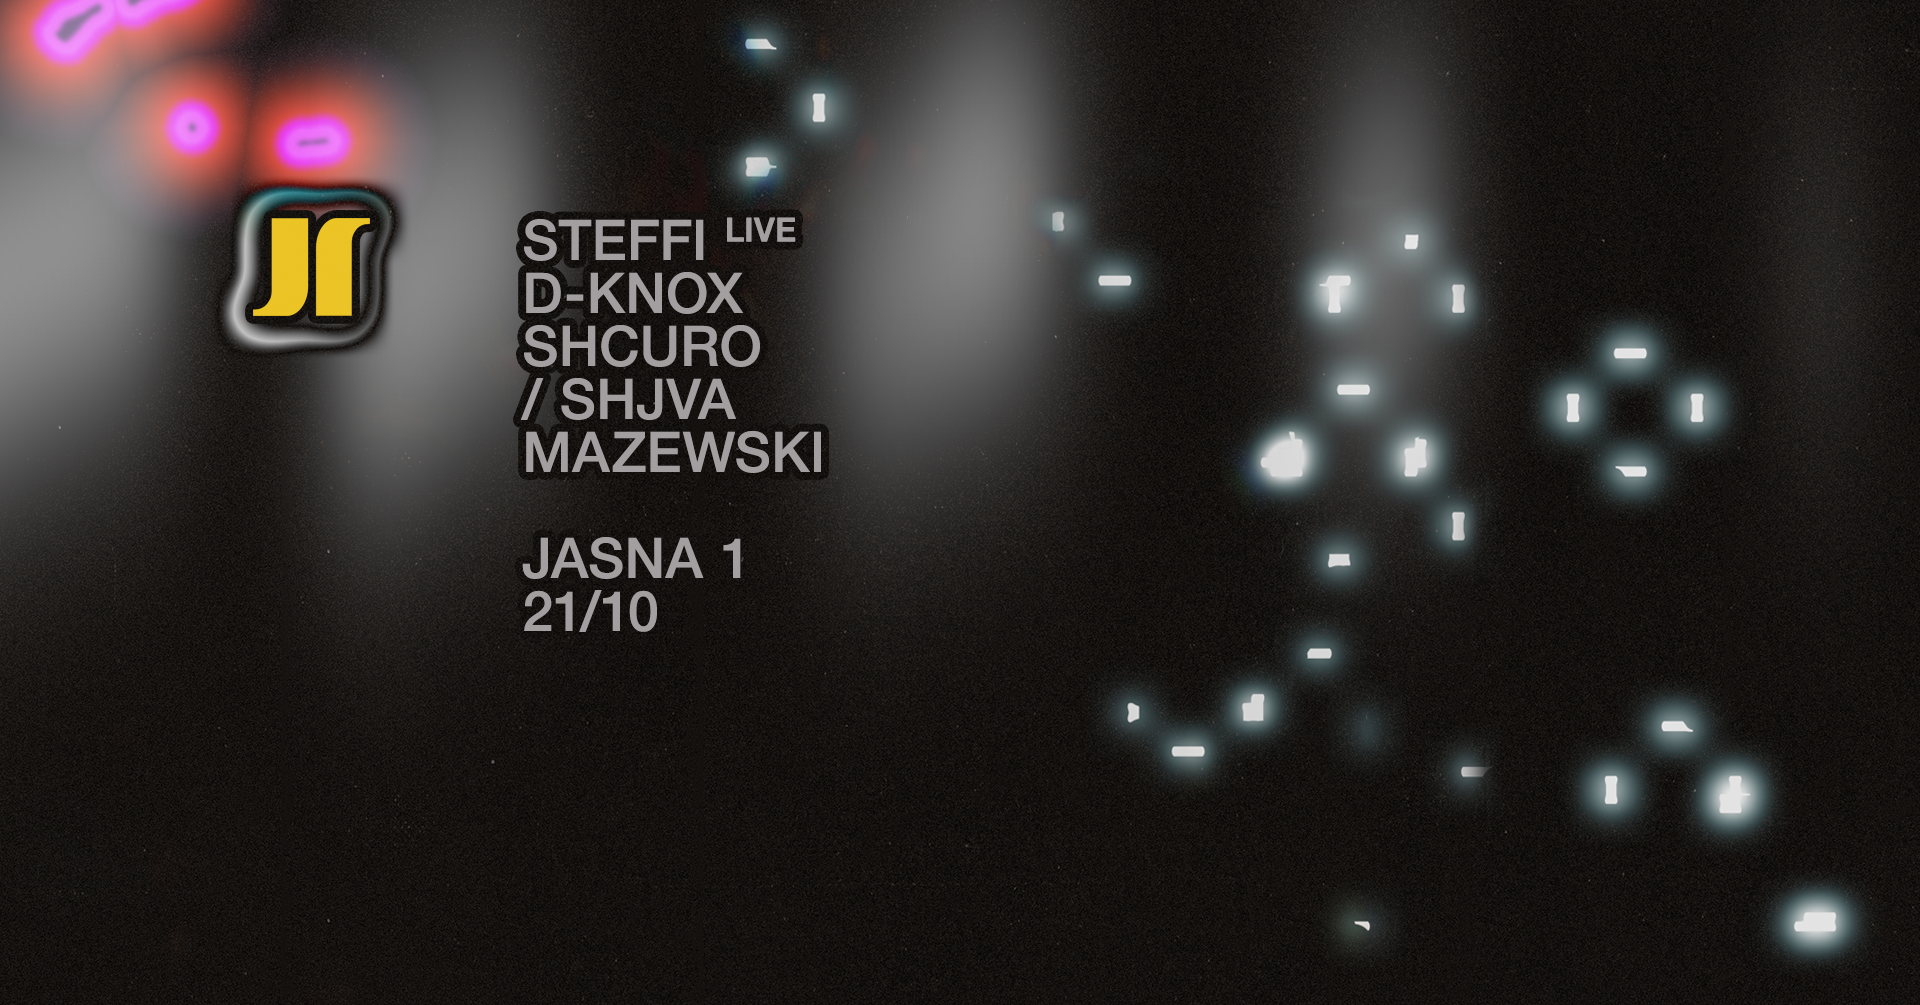 J1 |Steffi LIVE, D-knox, Shcuro / Shjva, Mazewski - フライヤー表